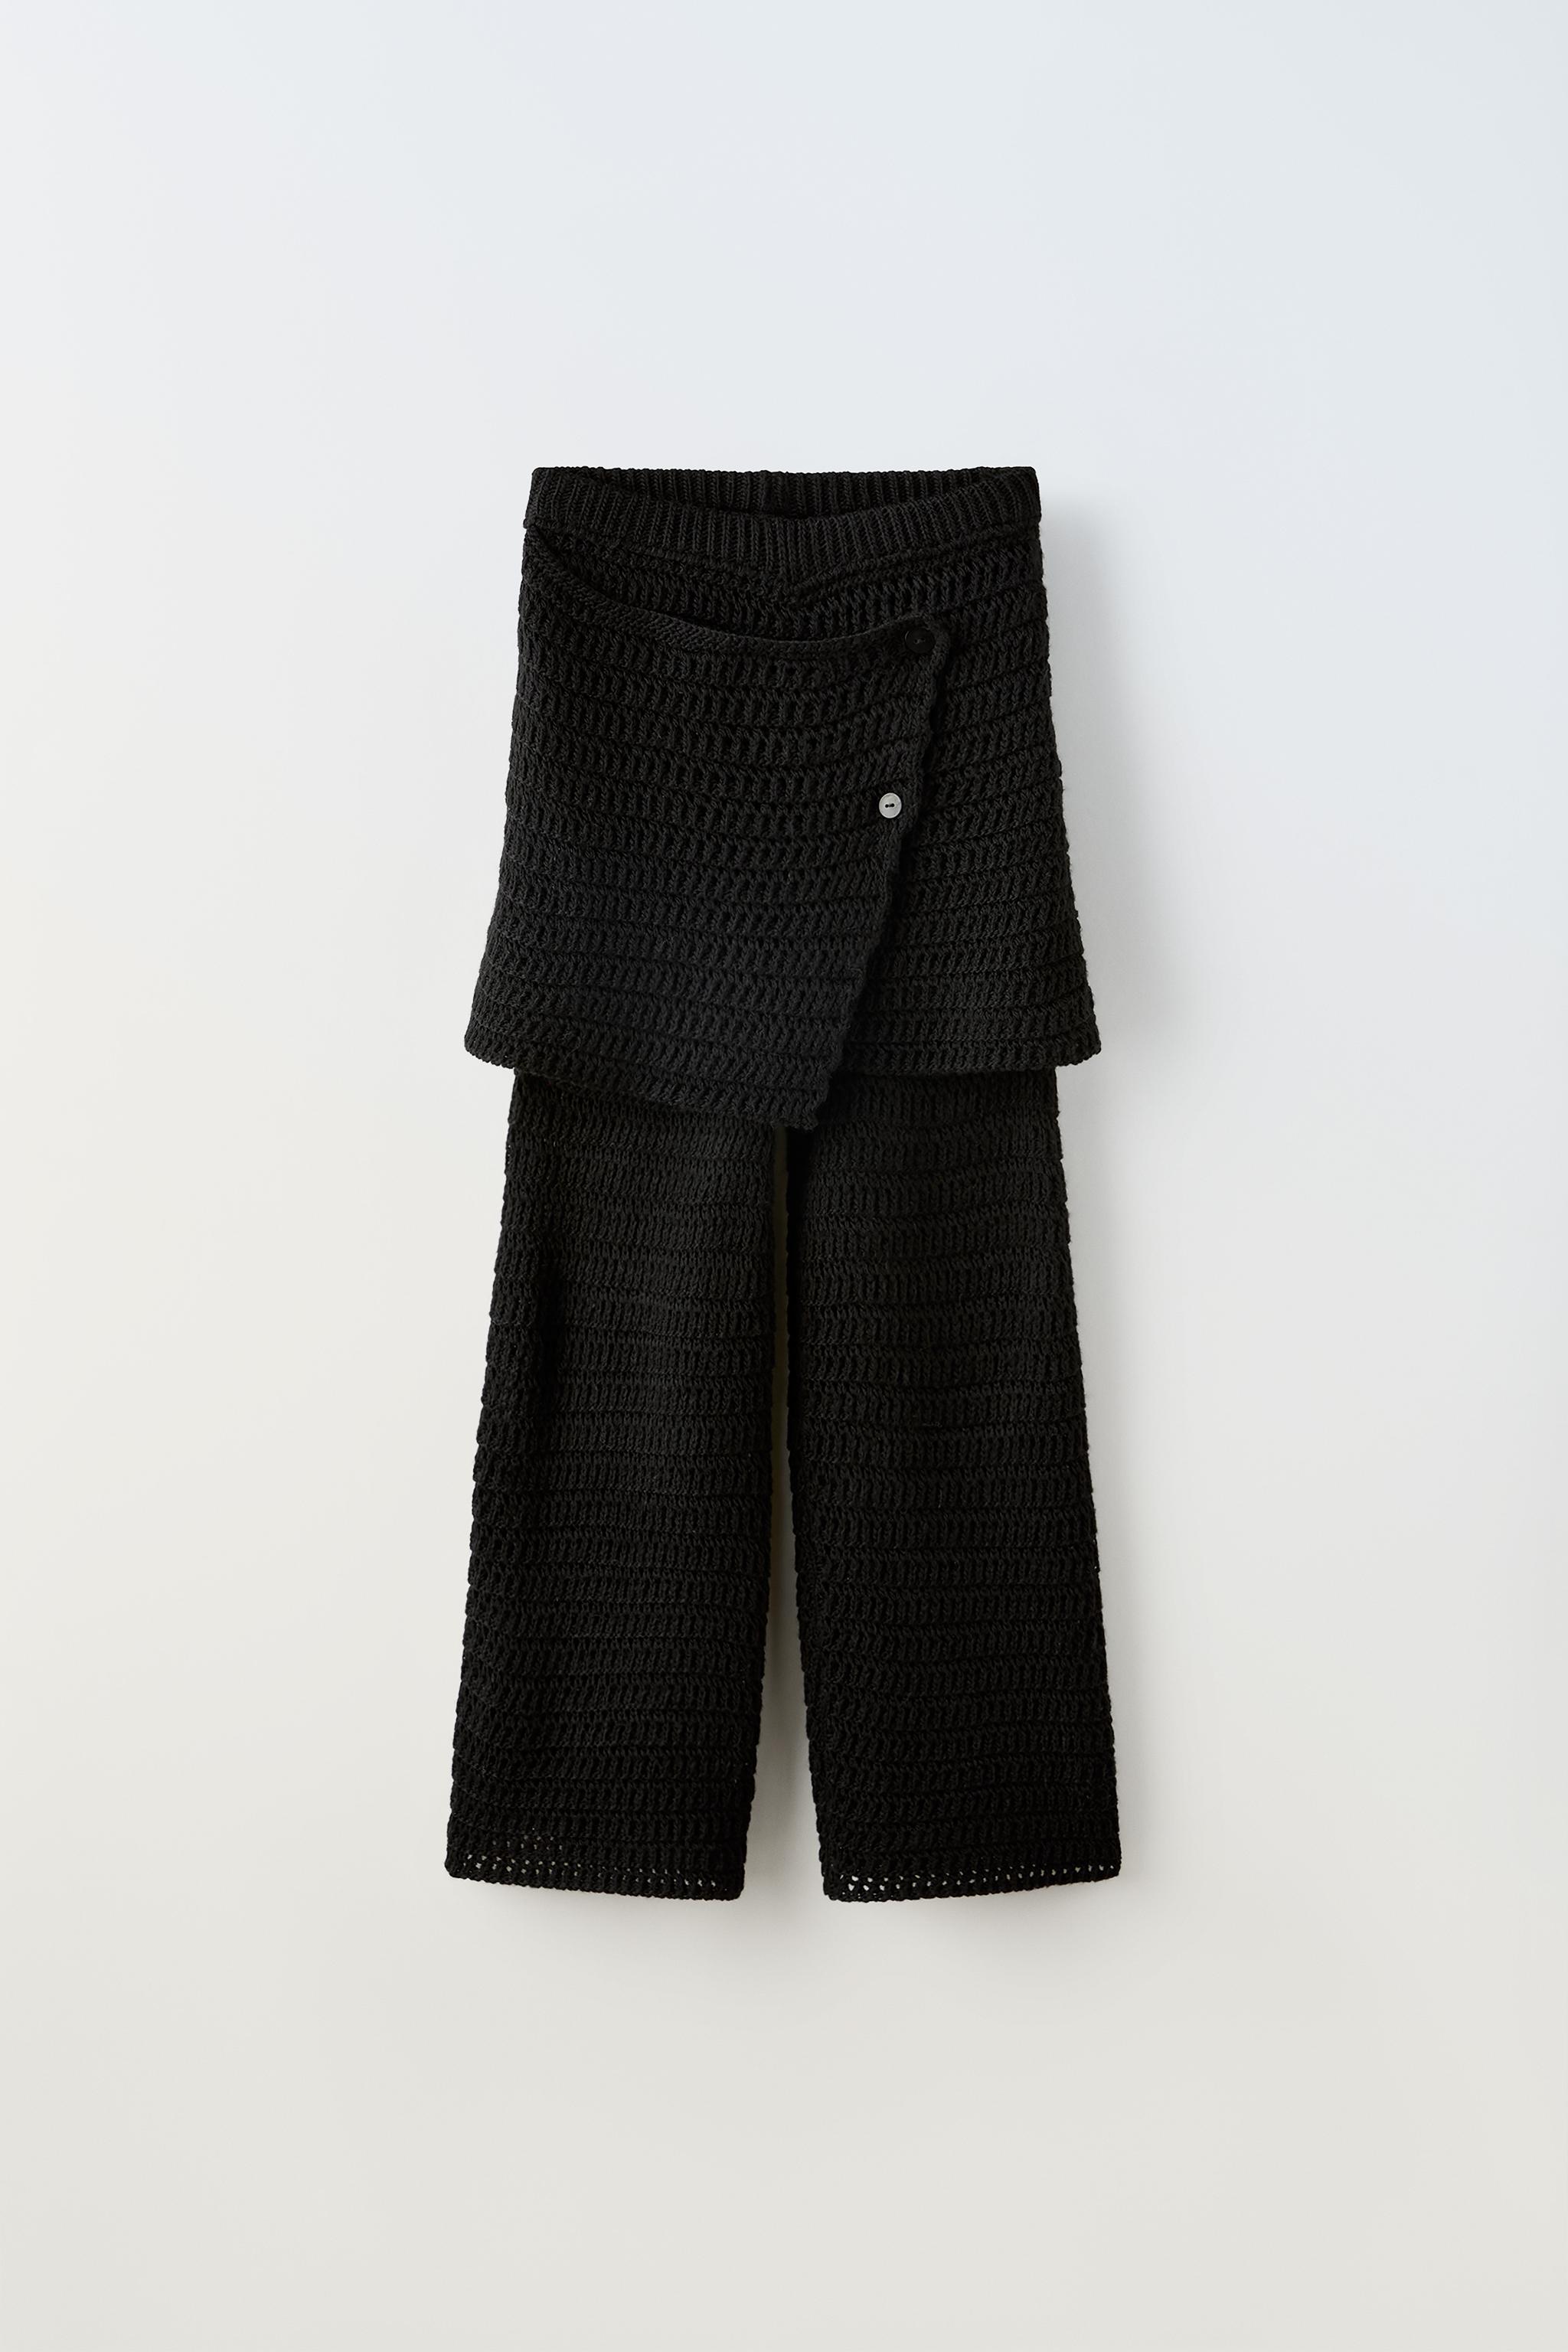 Knit Pants, Women's Knitted Pants